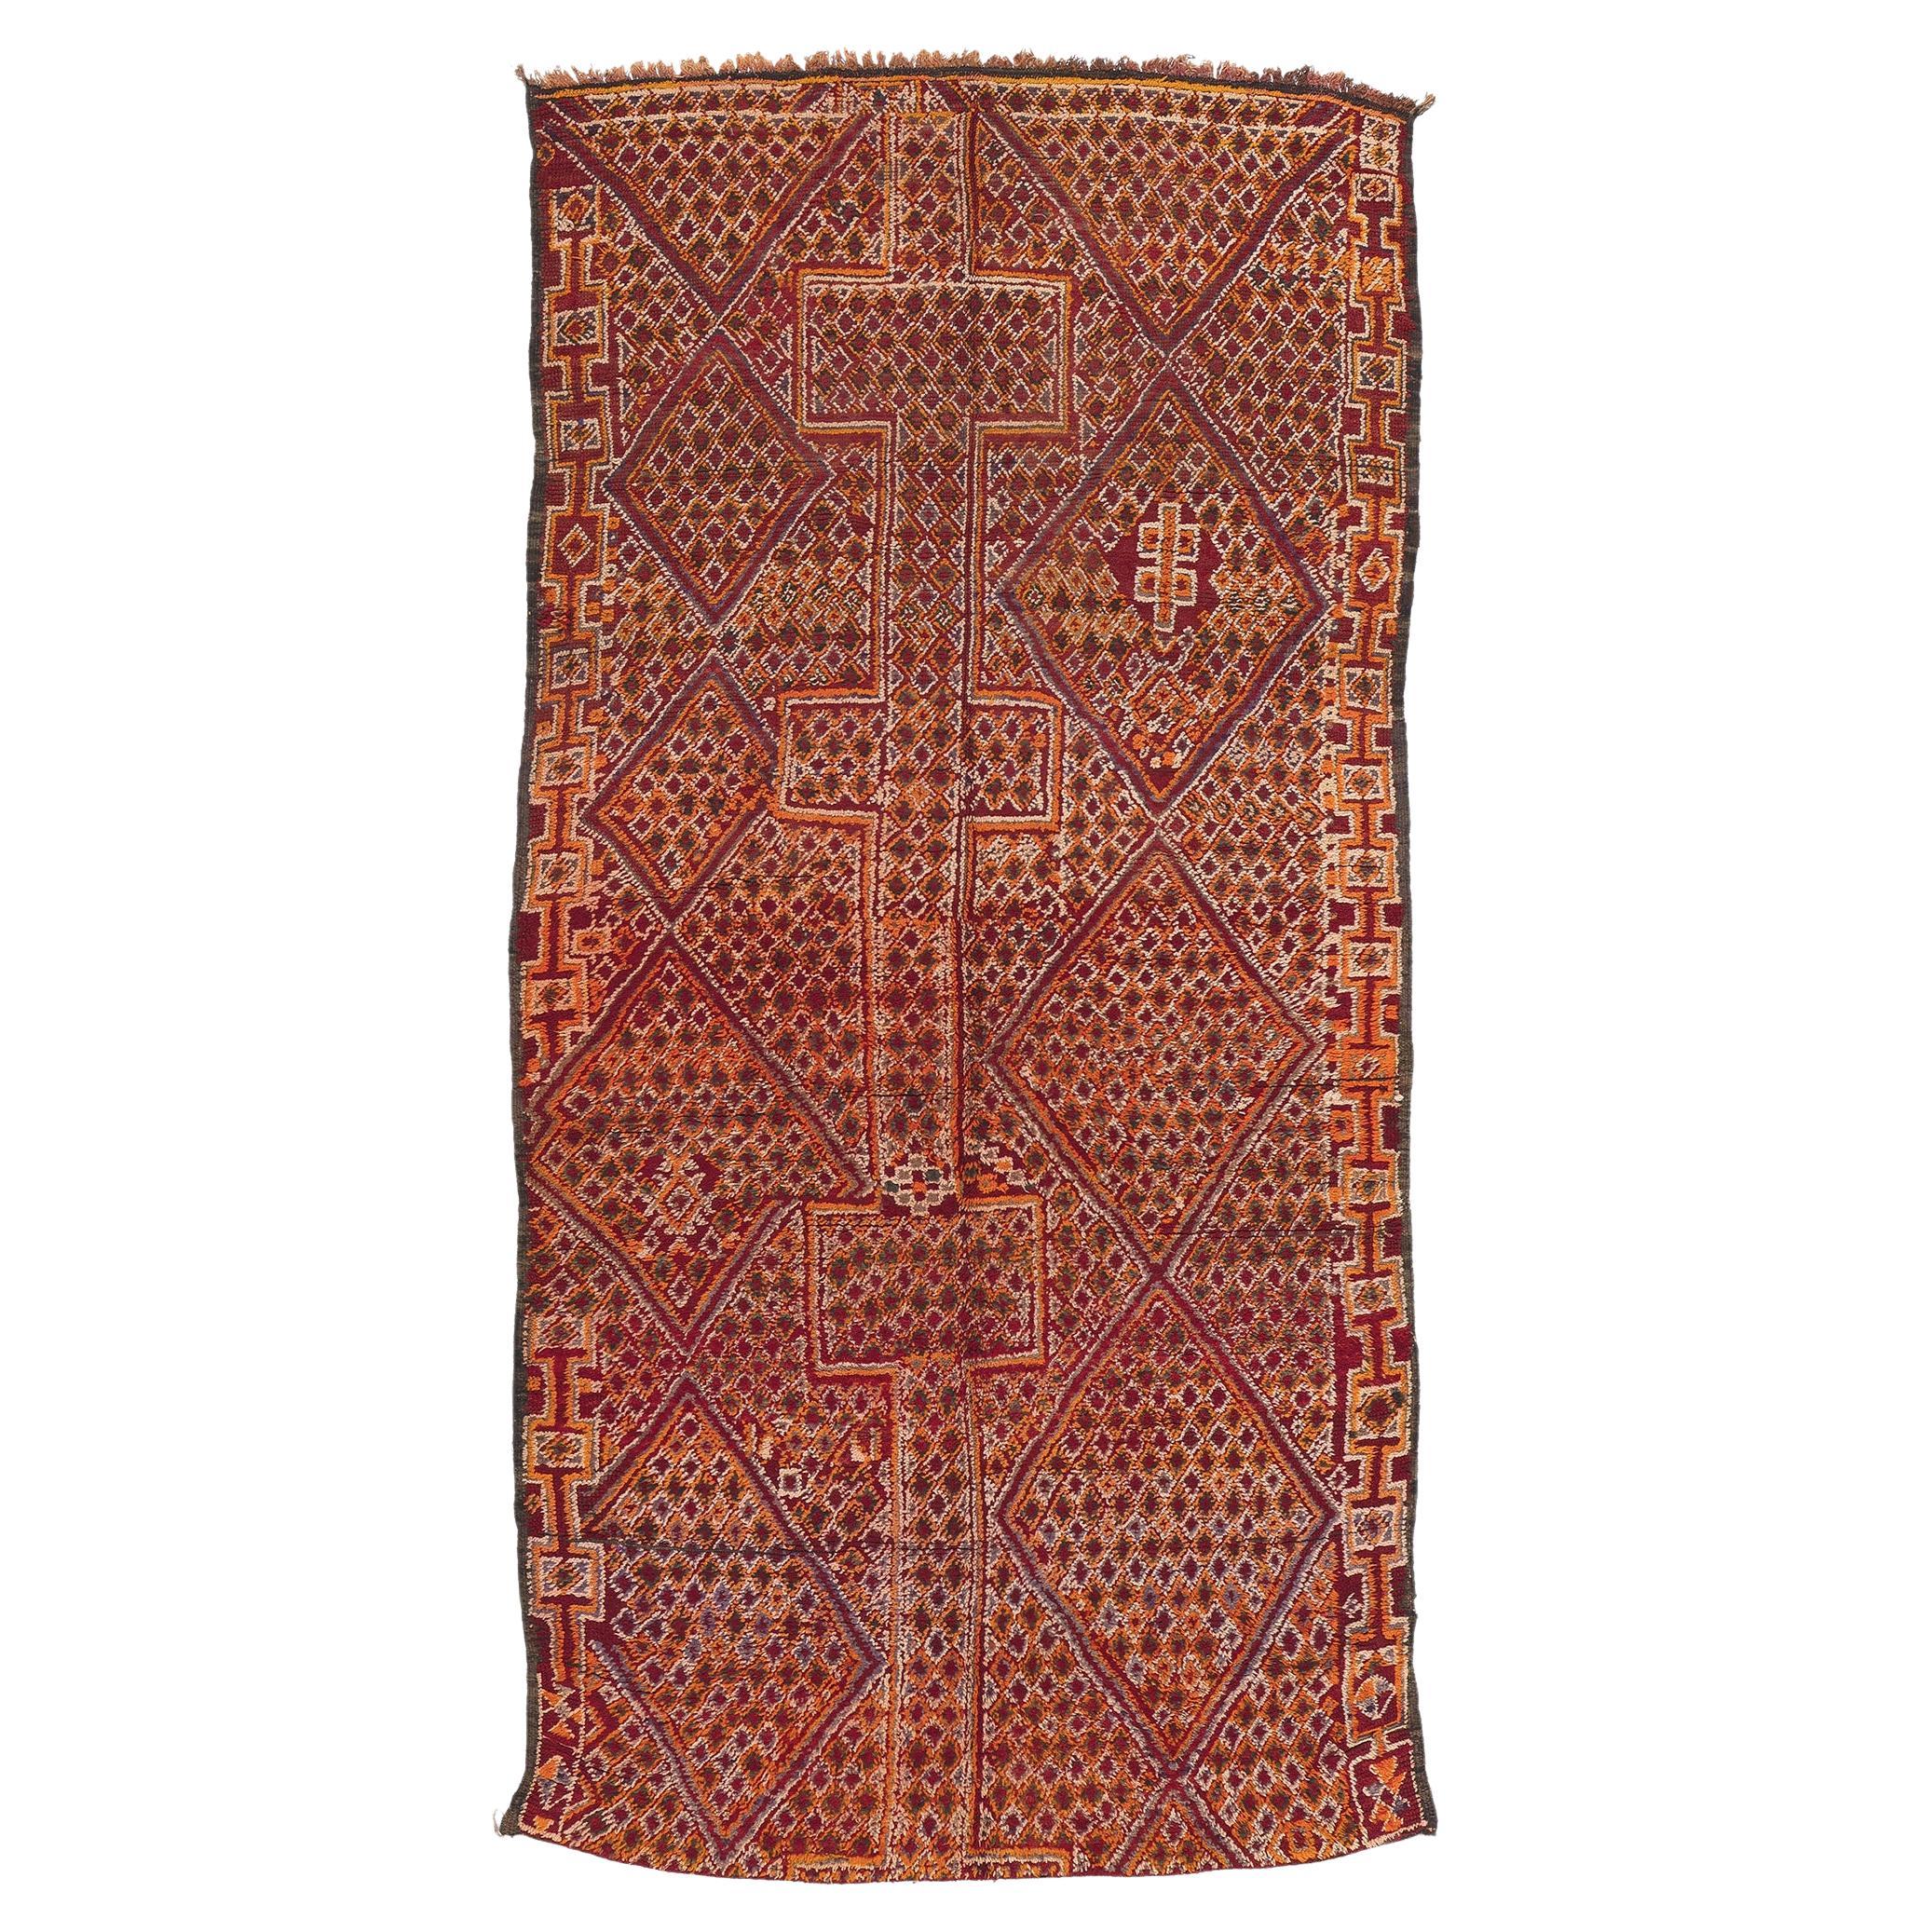 Marokkanischer Beni MGuild-Teppich im Vintage-Stil, Irresistibly Chic Meets Sophisticated Boho im Angebot